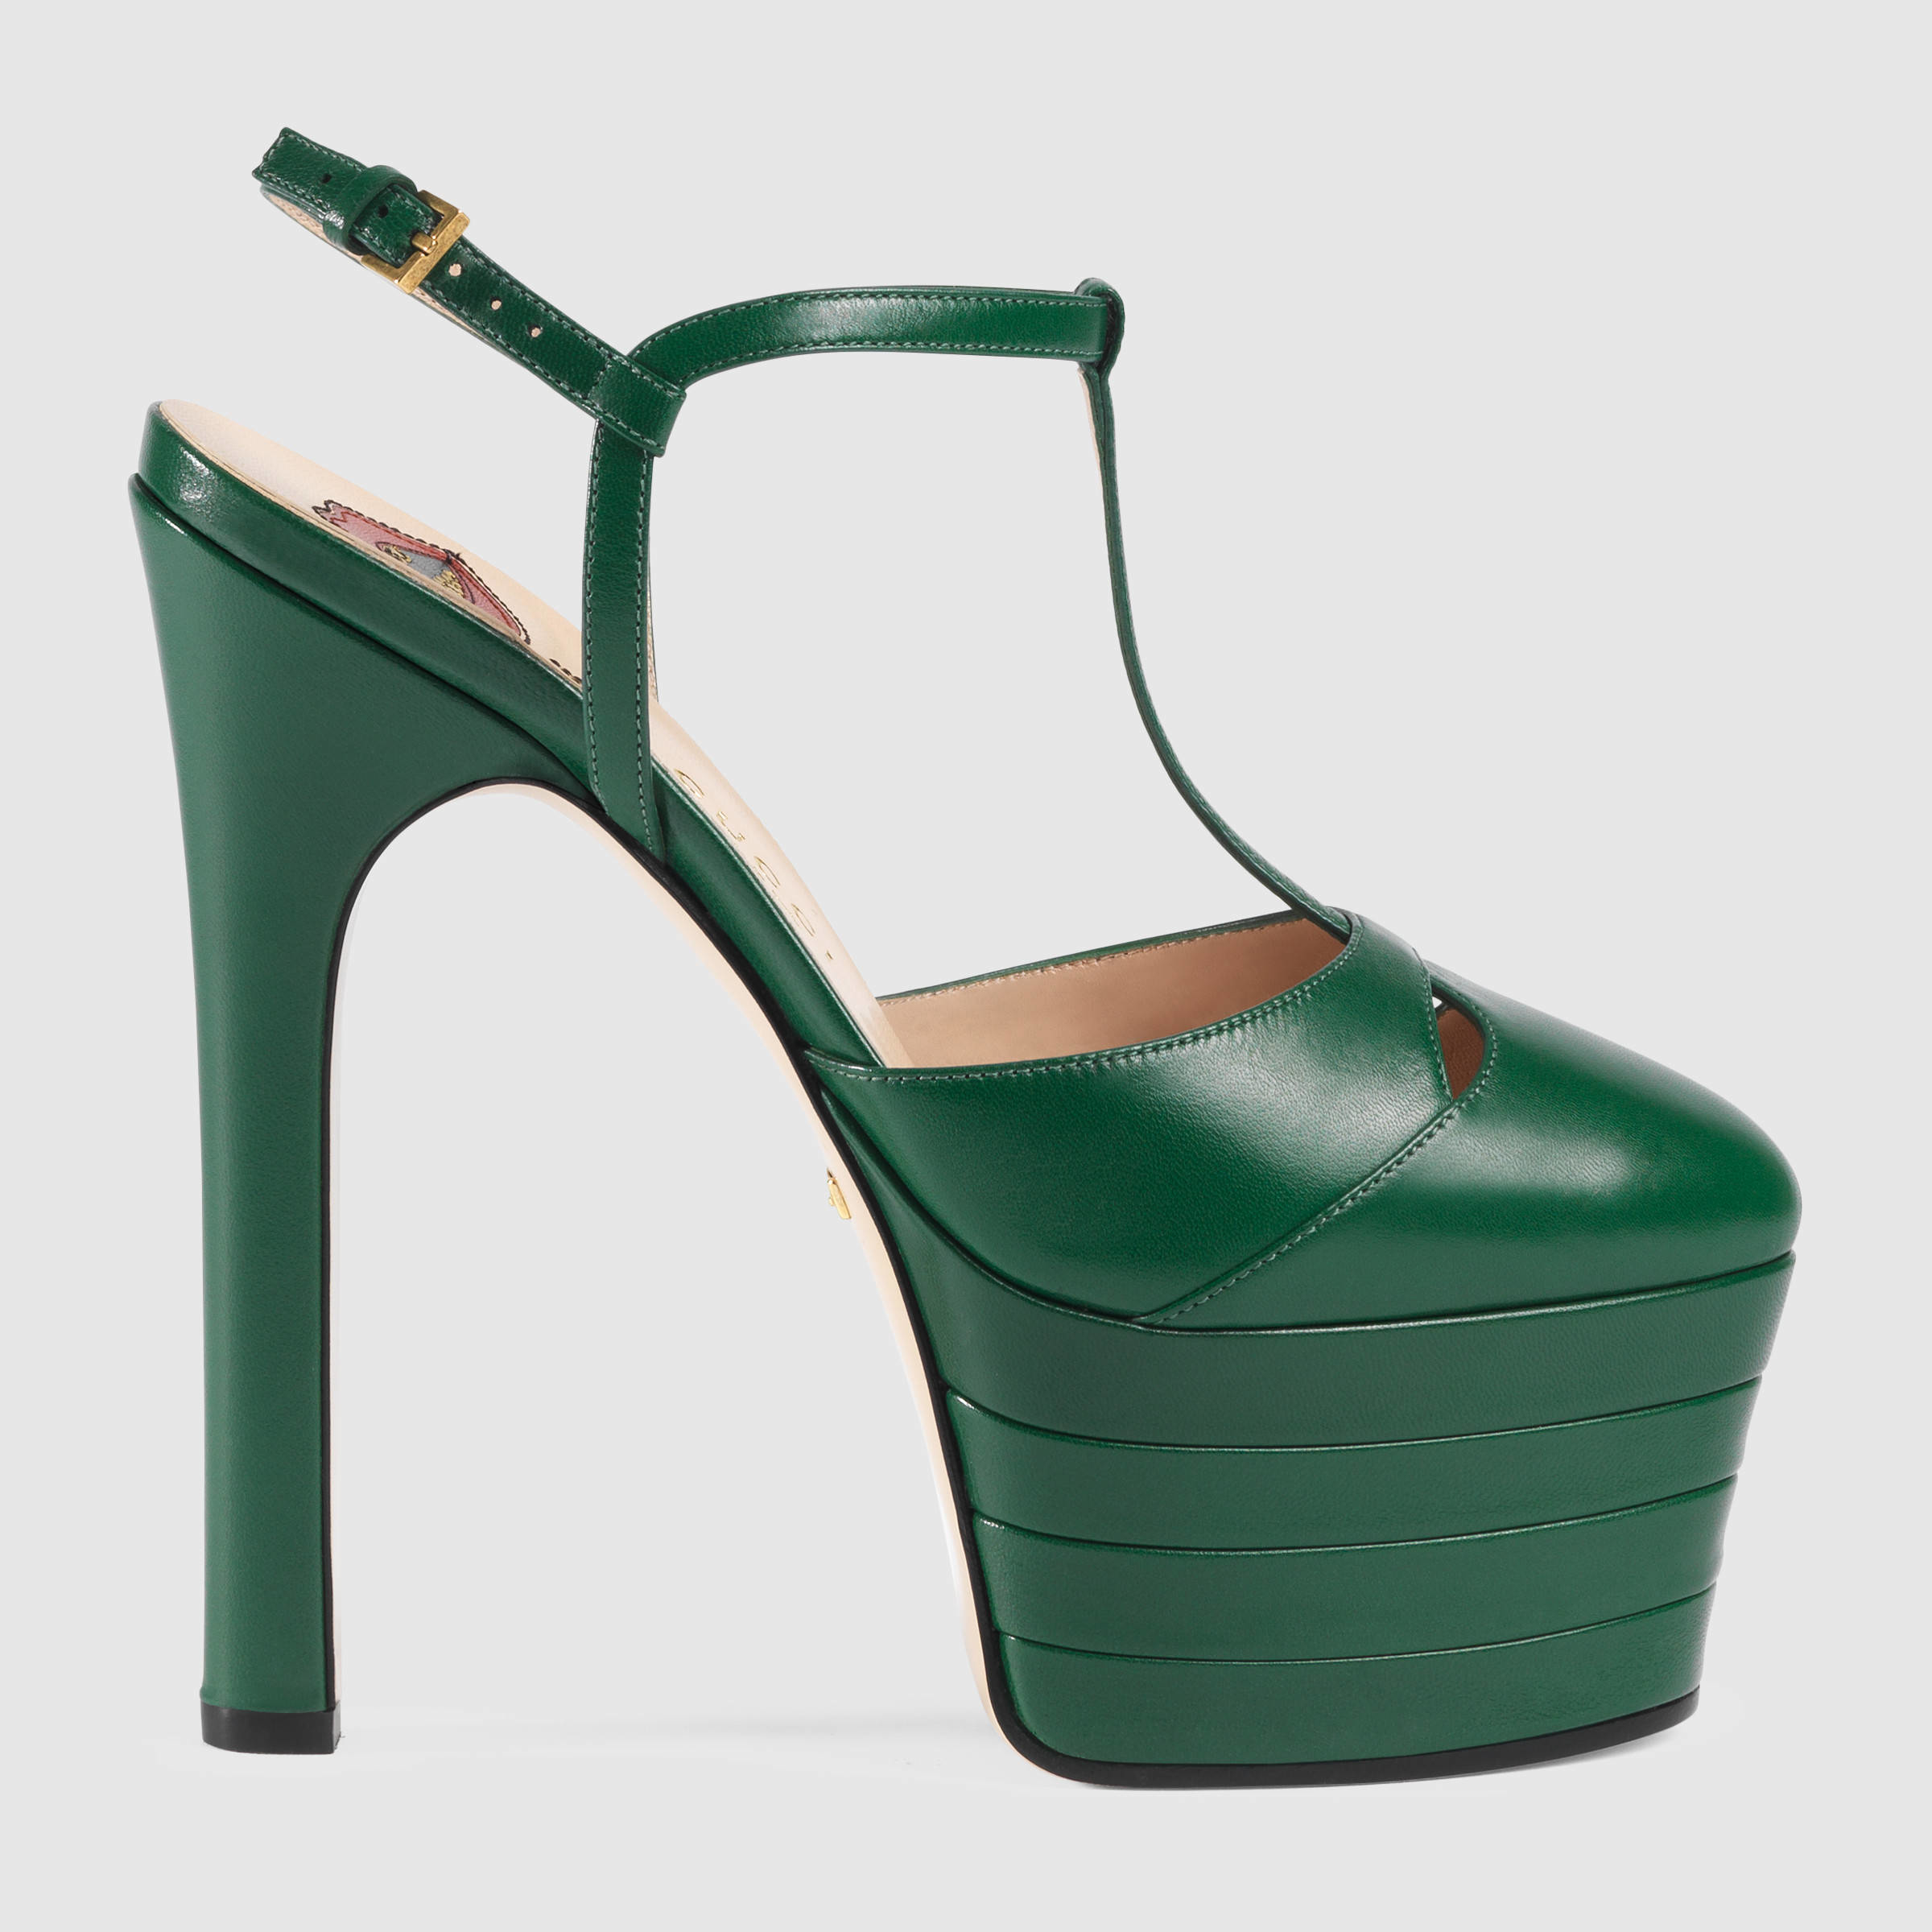 Gucci Leather Platform Pump in Green | Lyst